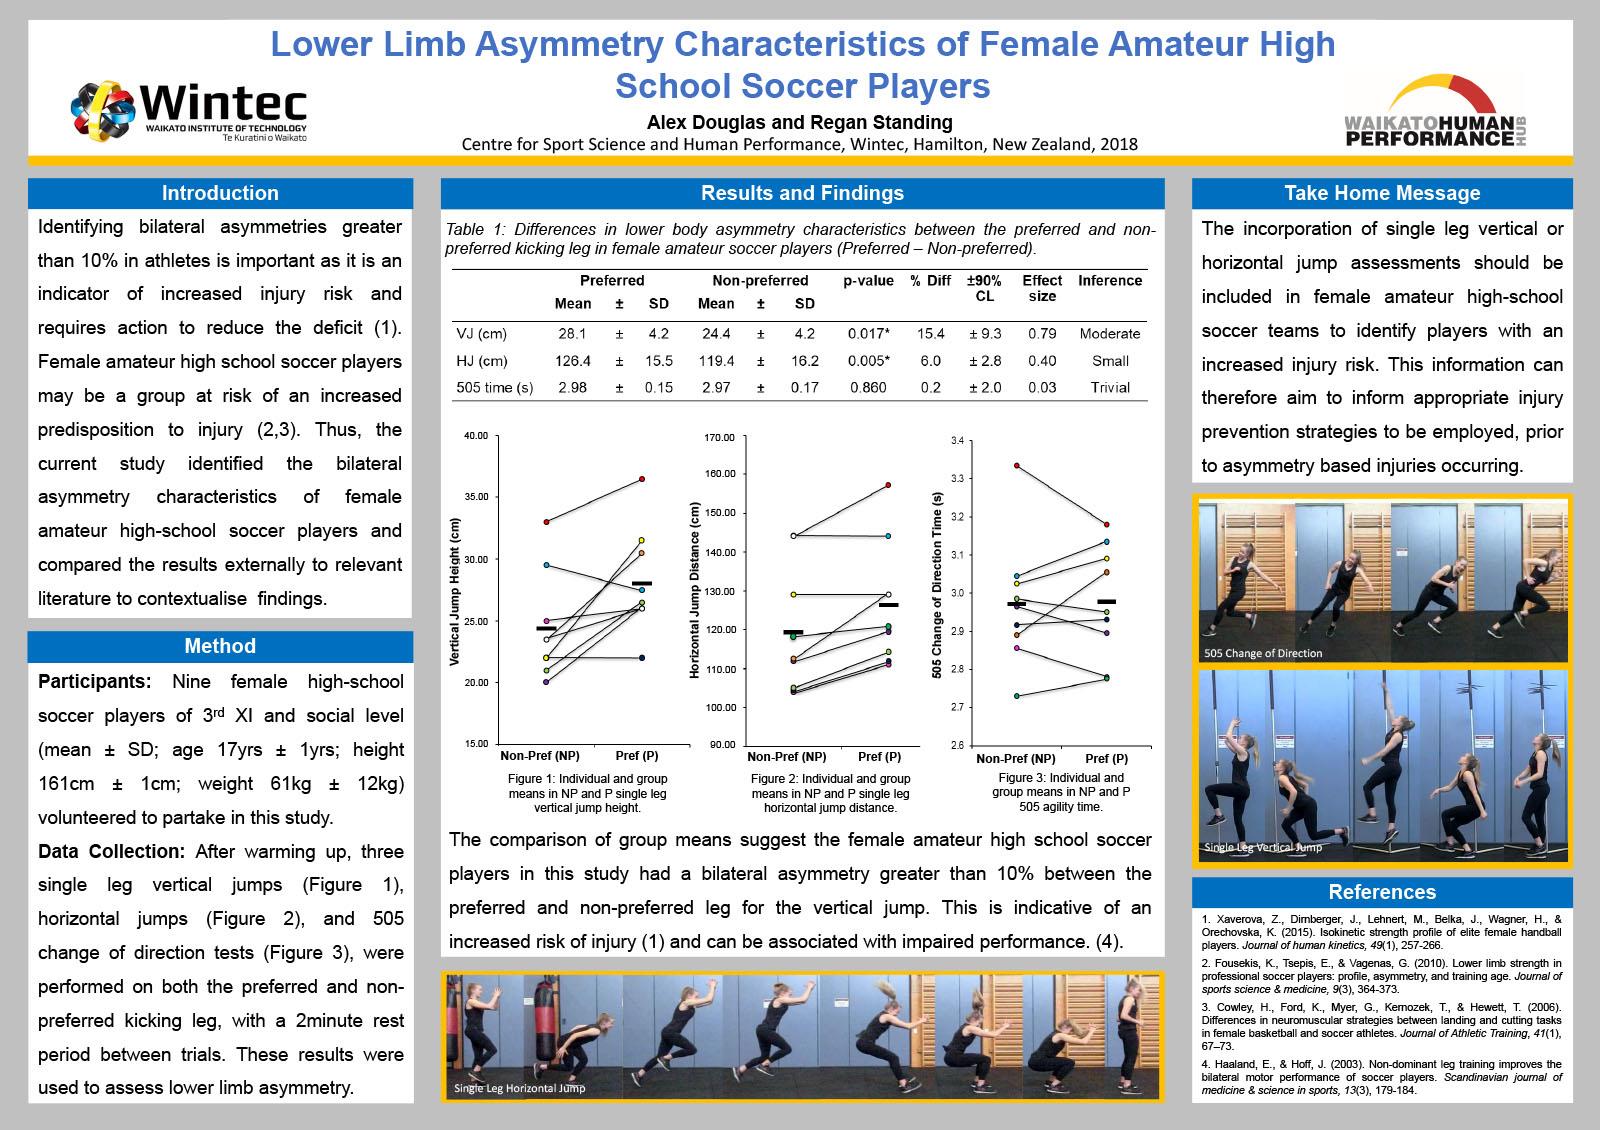 Lower Limb Asymmetry Characteristics of Female Amateur High School Soccer Players